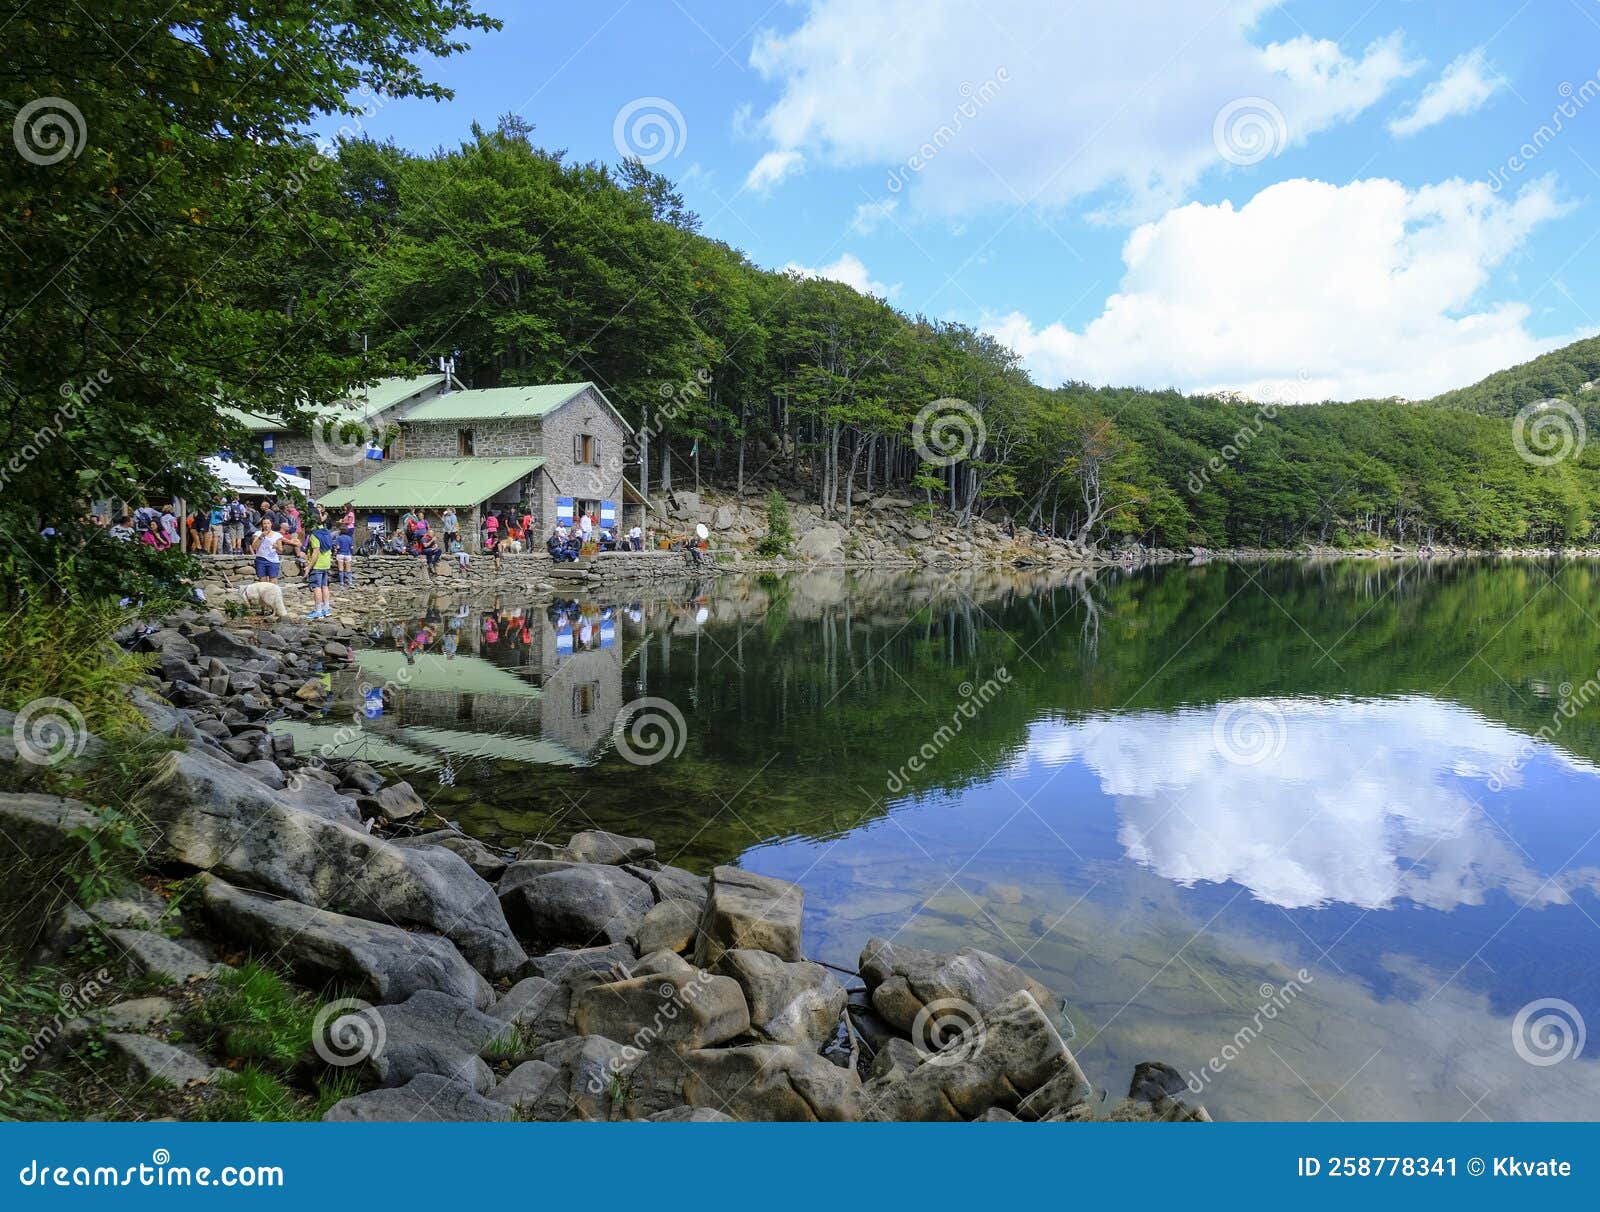 lake santo, lago santo. shelter with tourists on lake. national park appennino tosco-emiliano. lagdei, emilia-romagna